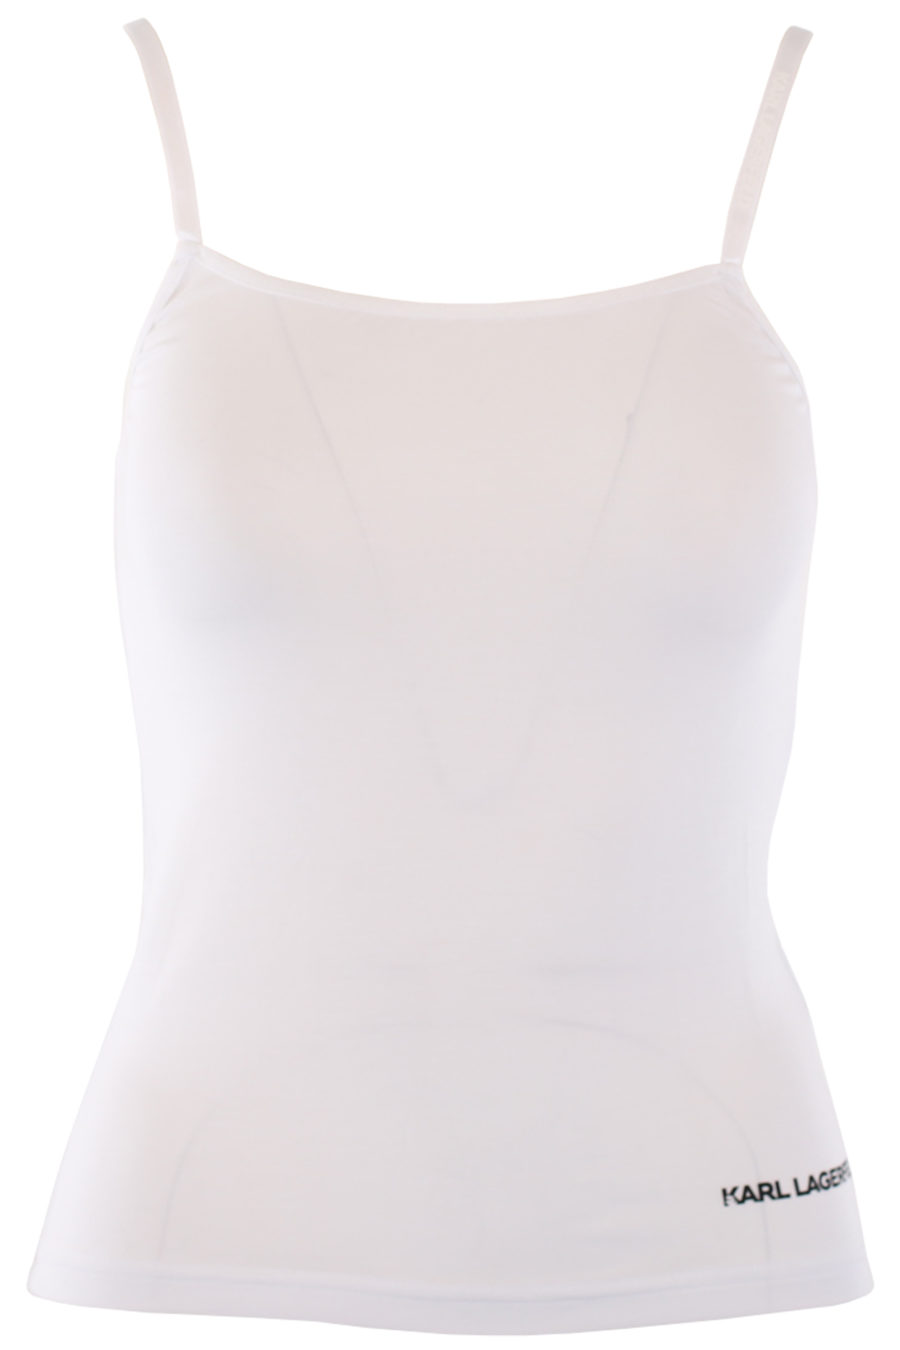 Camiseta interior blanca sin mangas con logo lateral - IMG 0662